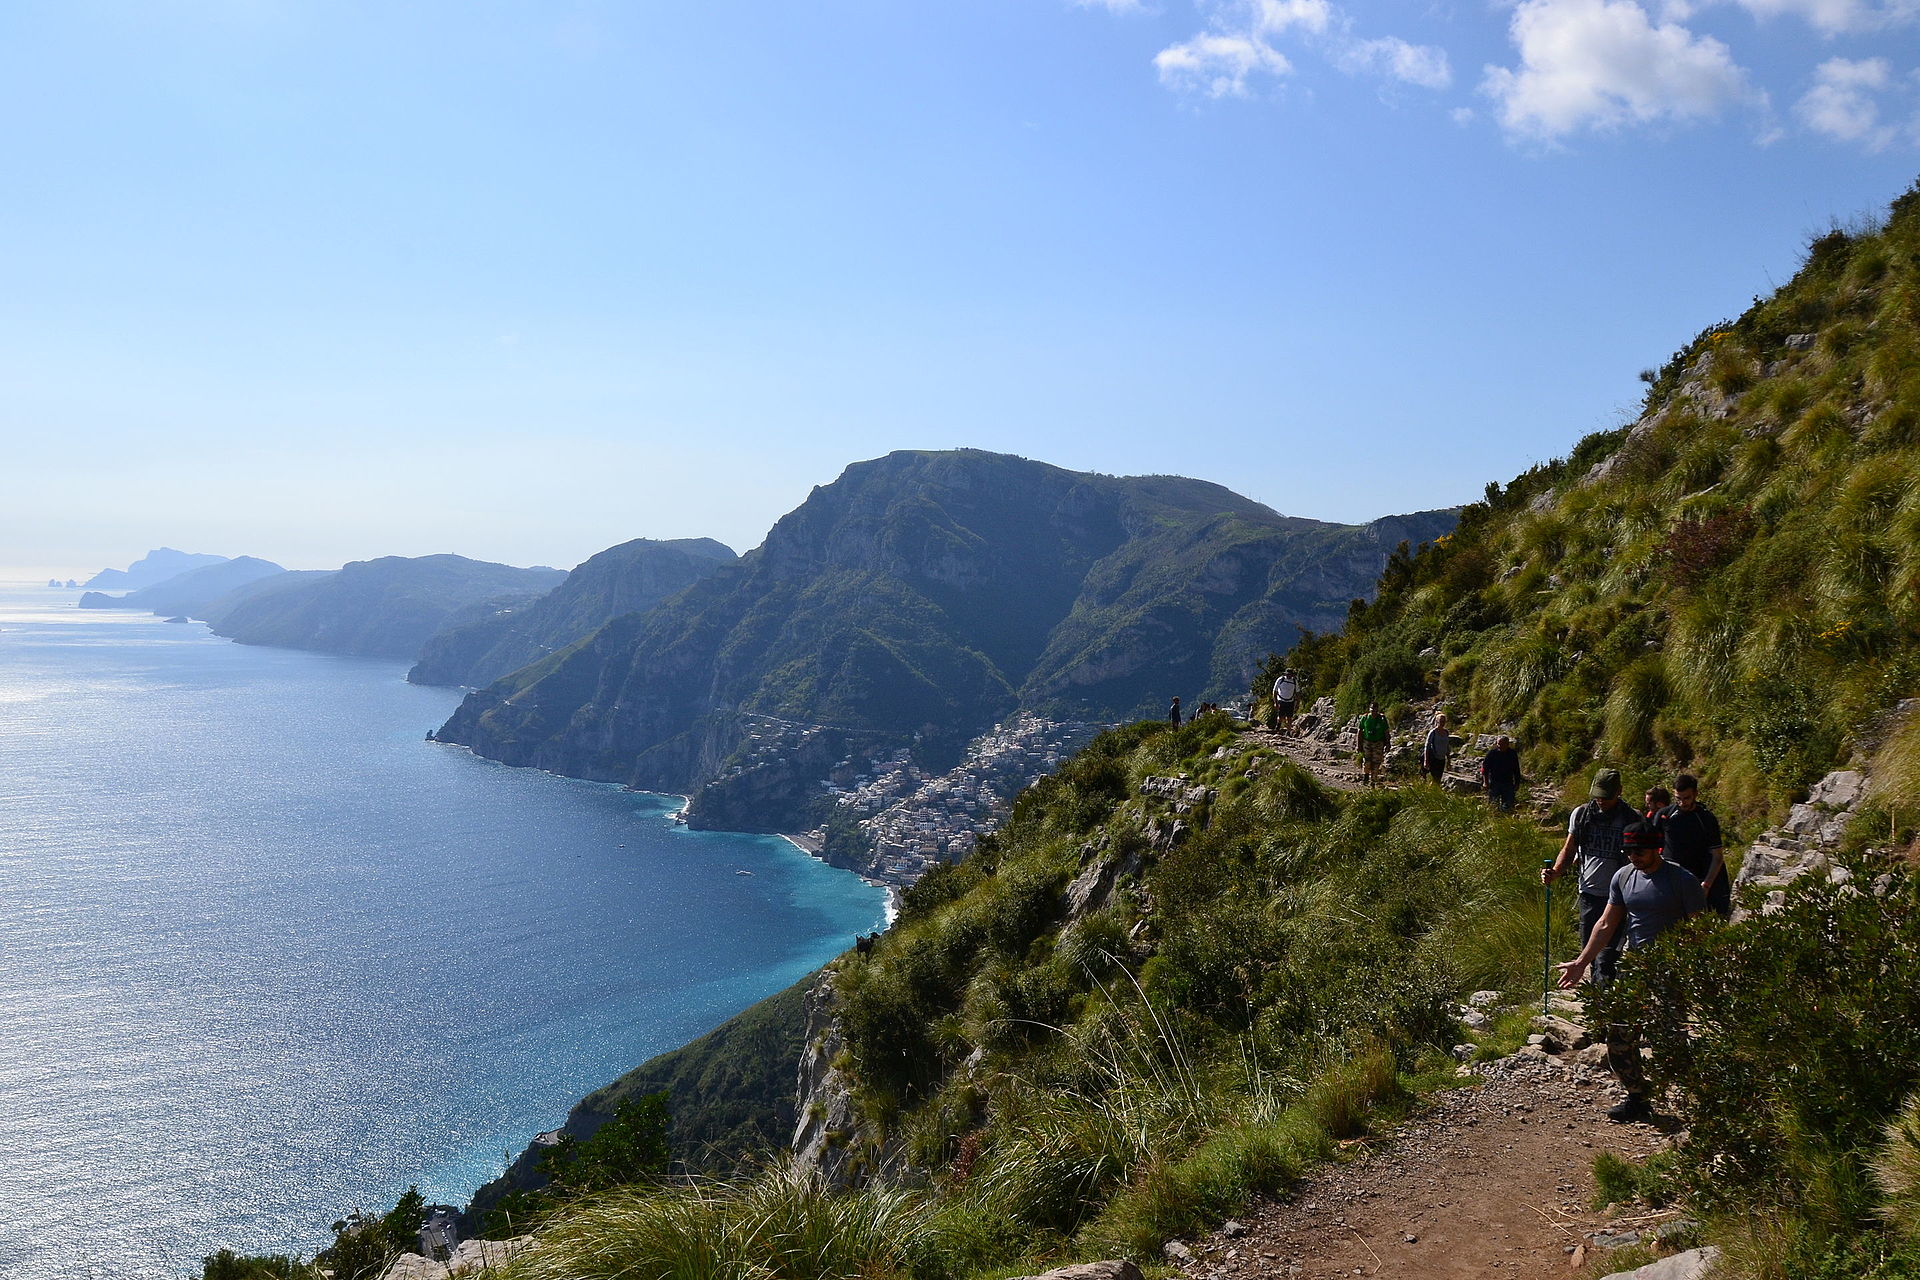 People enjoy hiking along the Path of the Gods on the Amalfi coast.